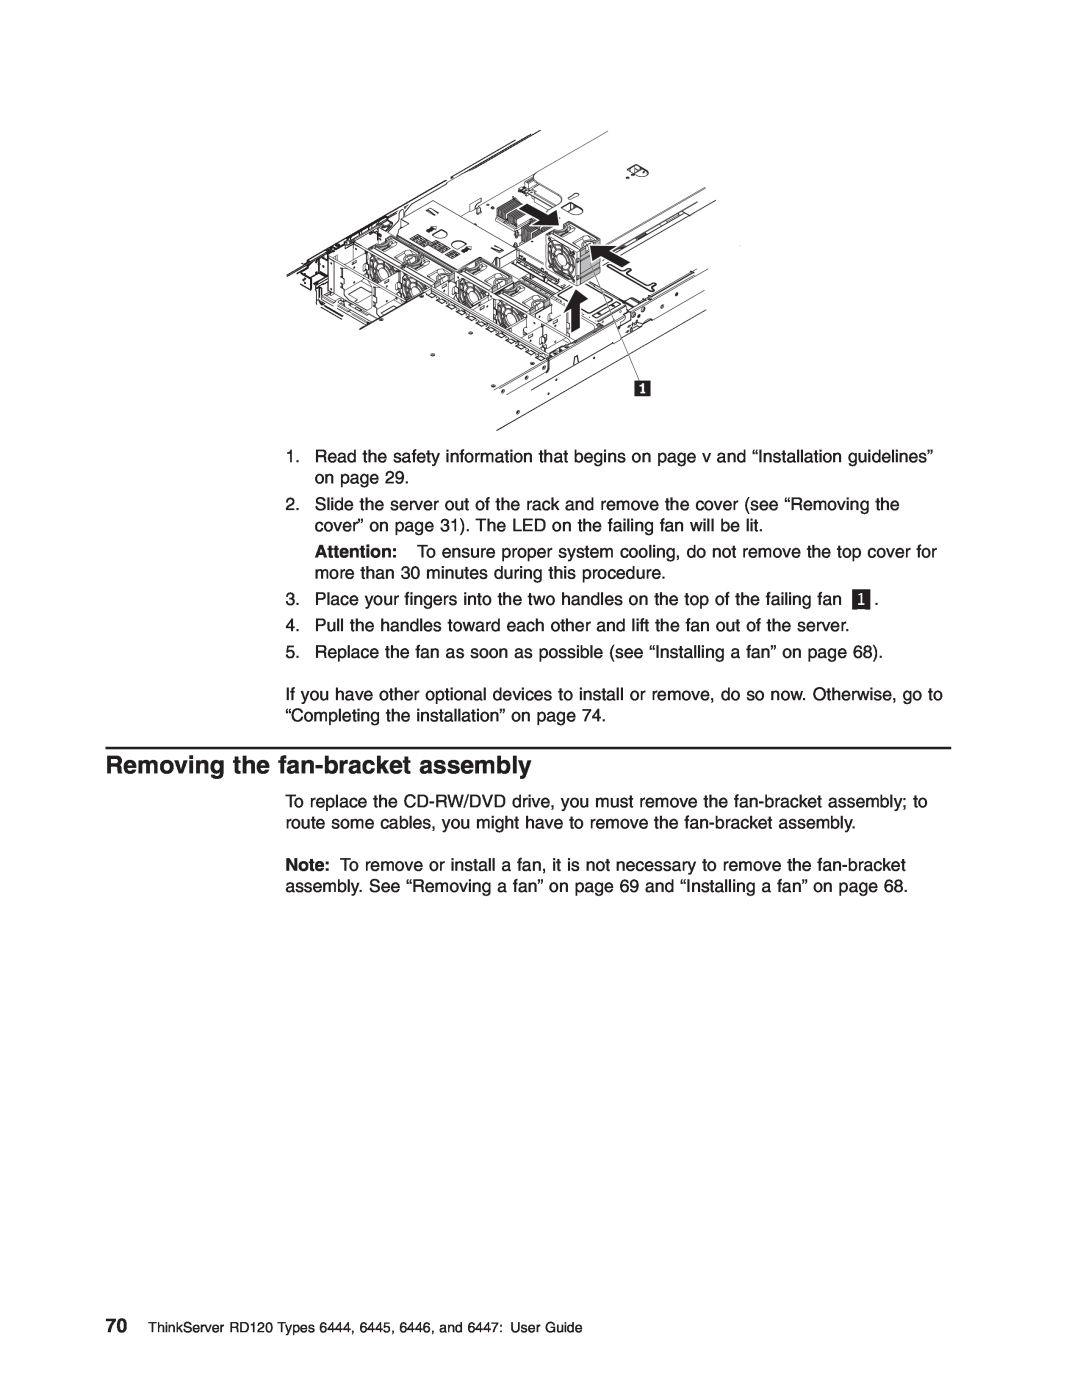 Lenovo RD120 manual Removing the fan-bracketassembly 